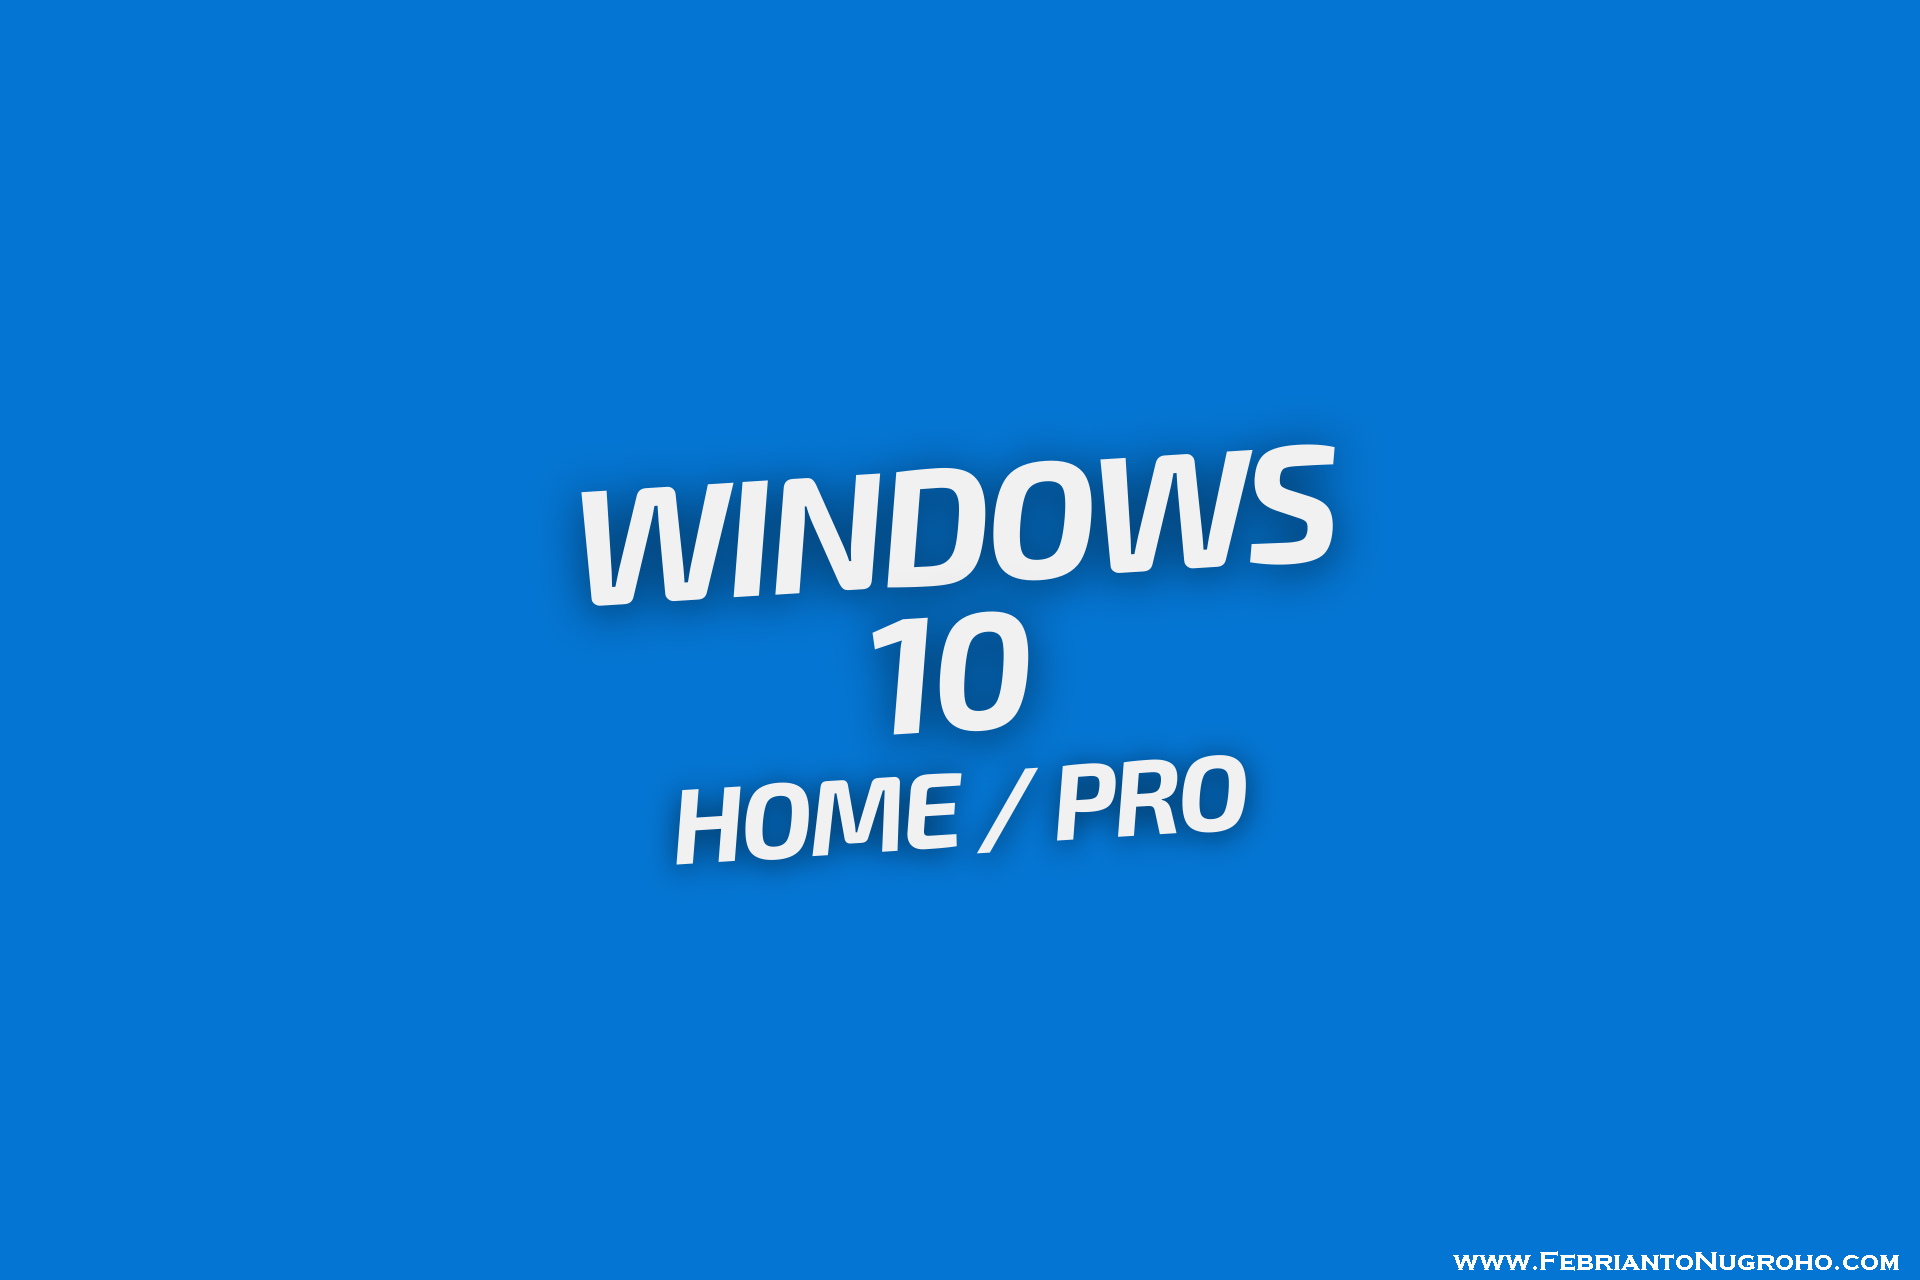 Perbandigan Antara Windows 10 Home dengan Pro